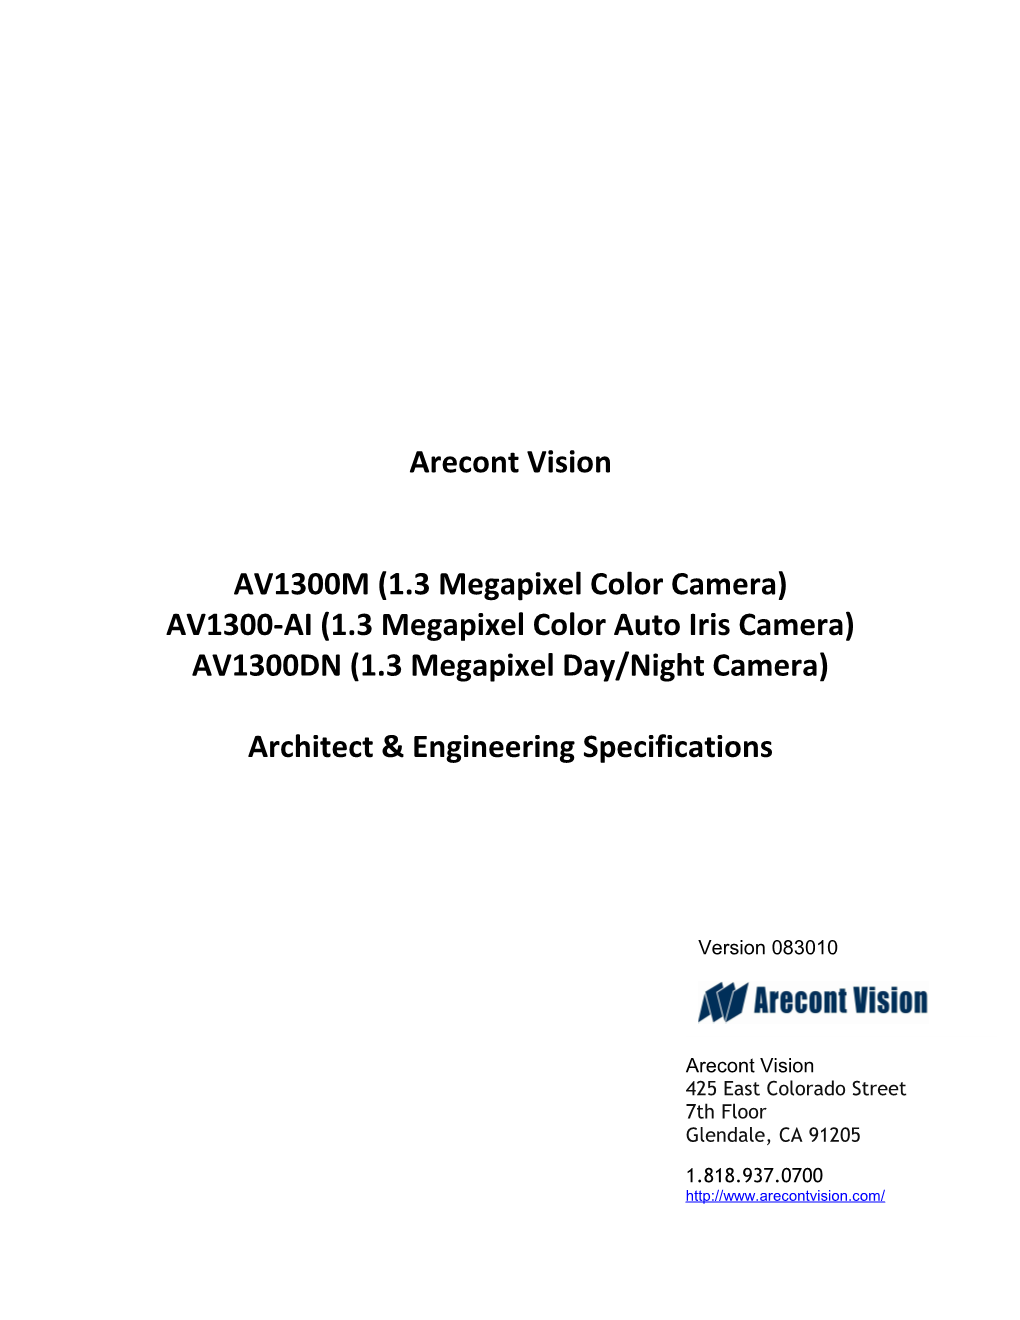 AV1300-AI (1.3 Megapixel Color Auto Iris Camera)